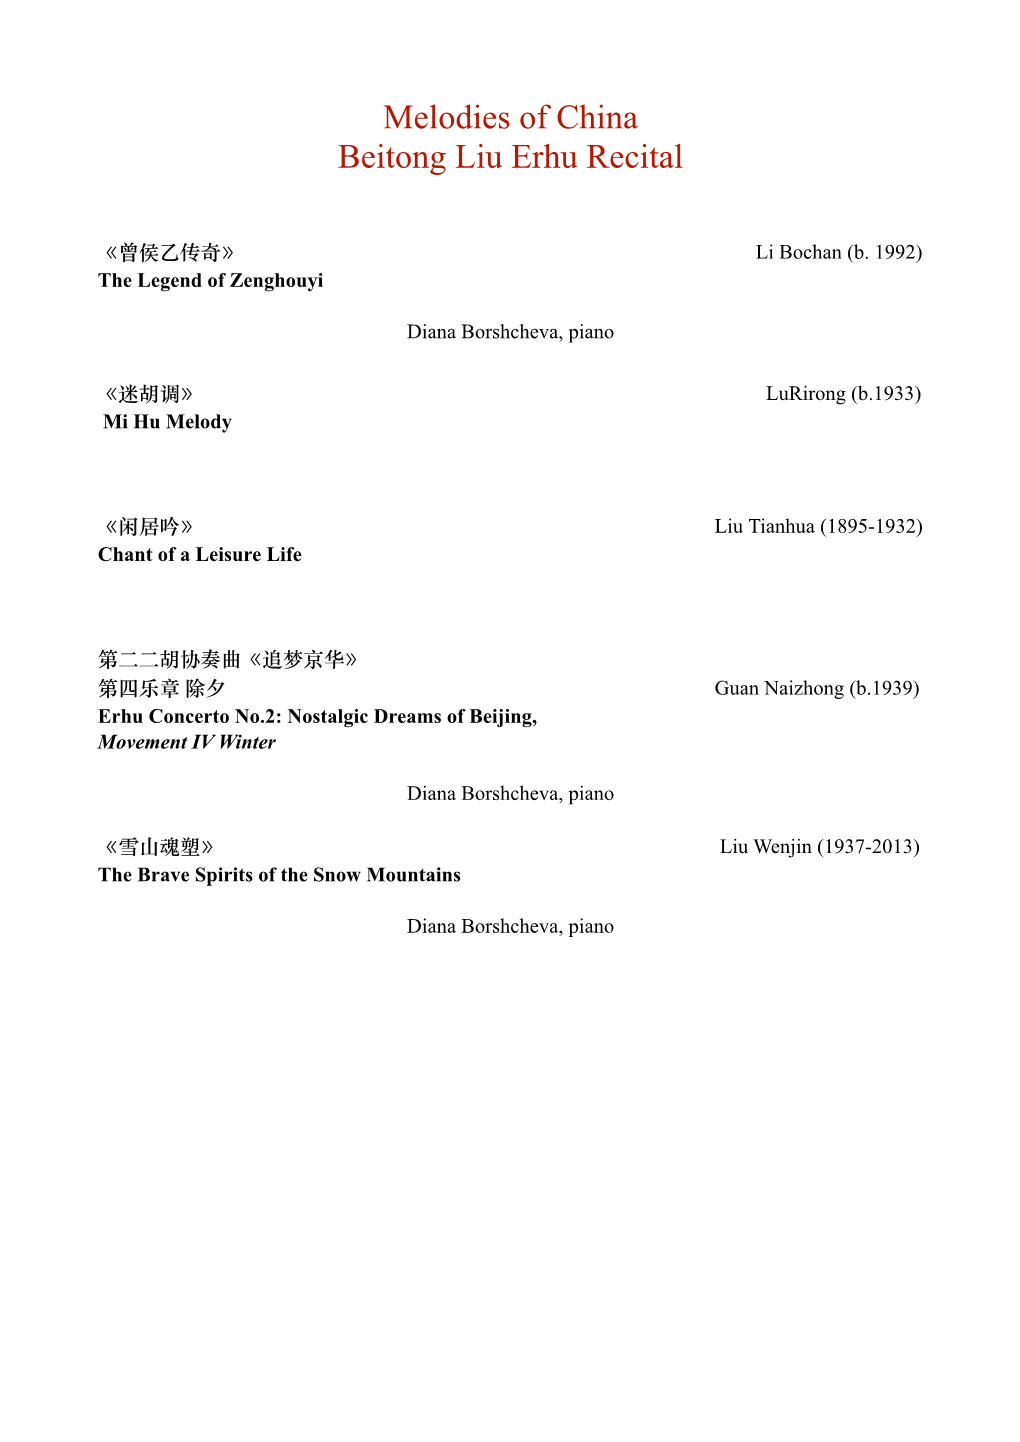 Program- Beitong Liu's Recital